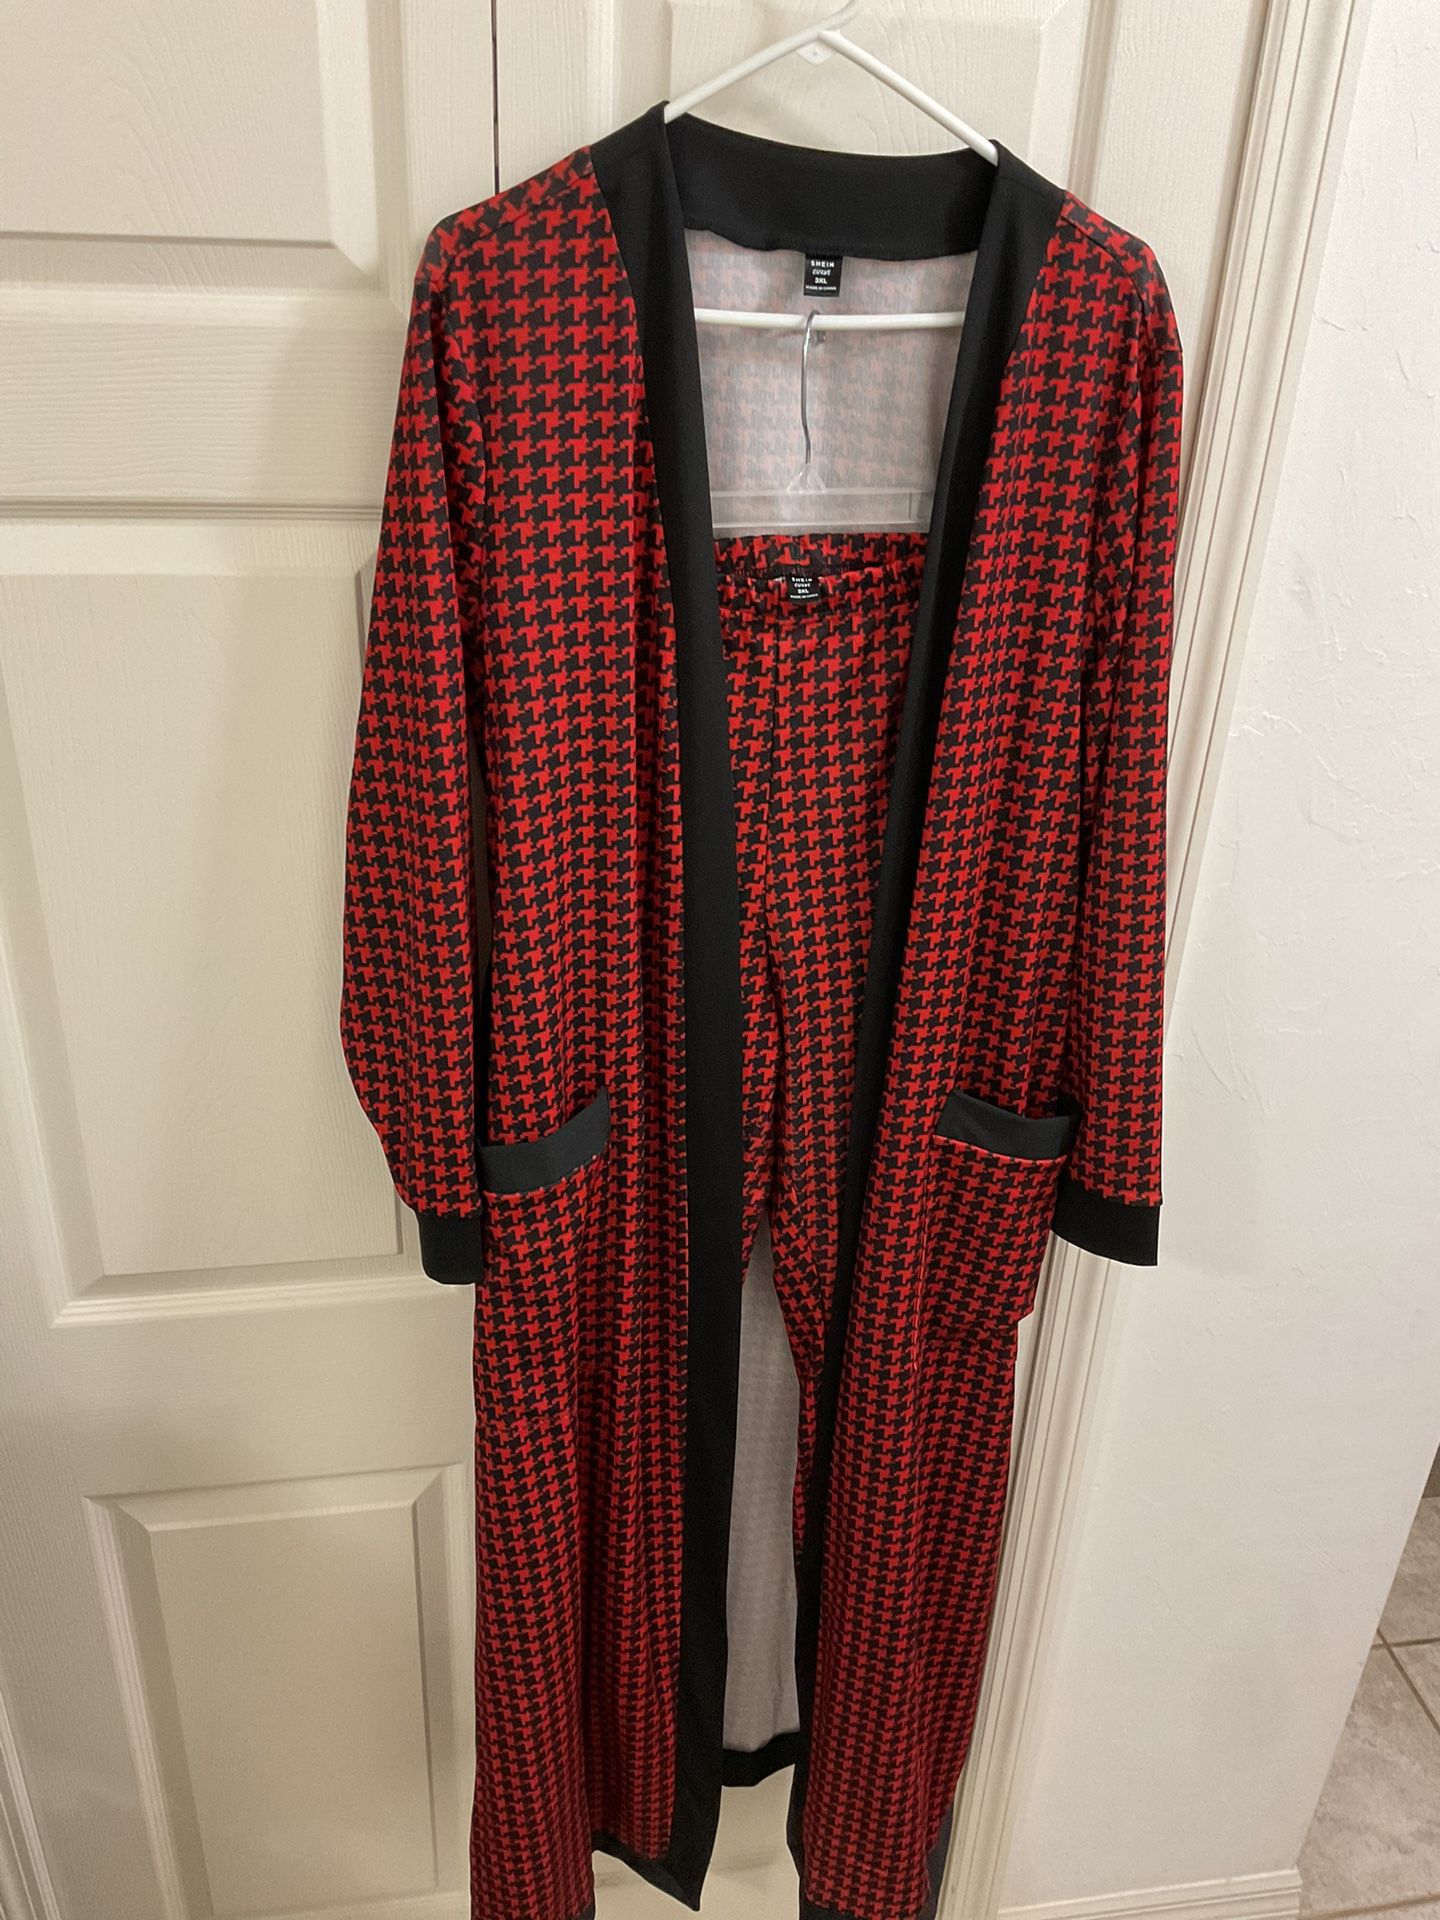 2 Pc Set - Belted Robe & Pants - Women’s 3x - Like New